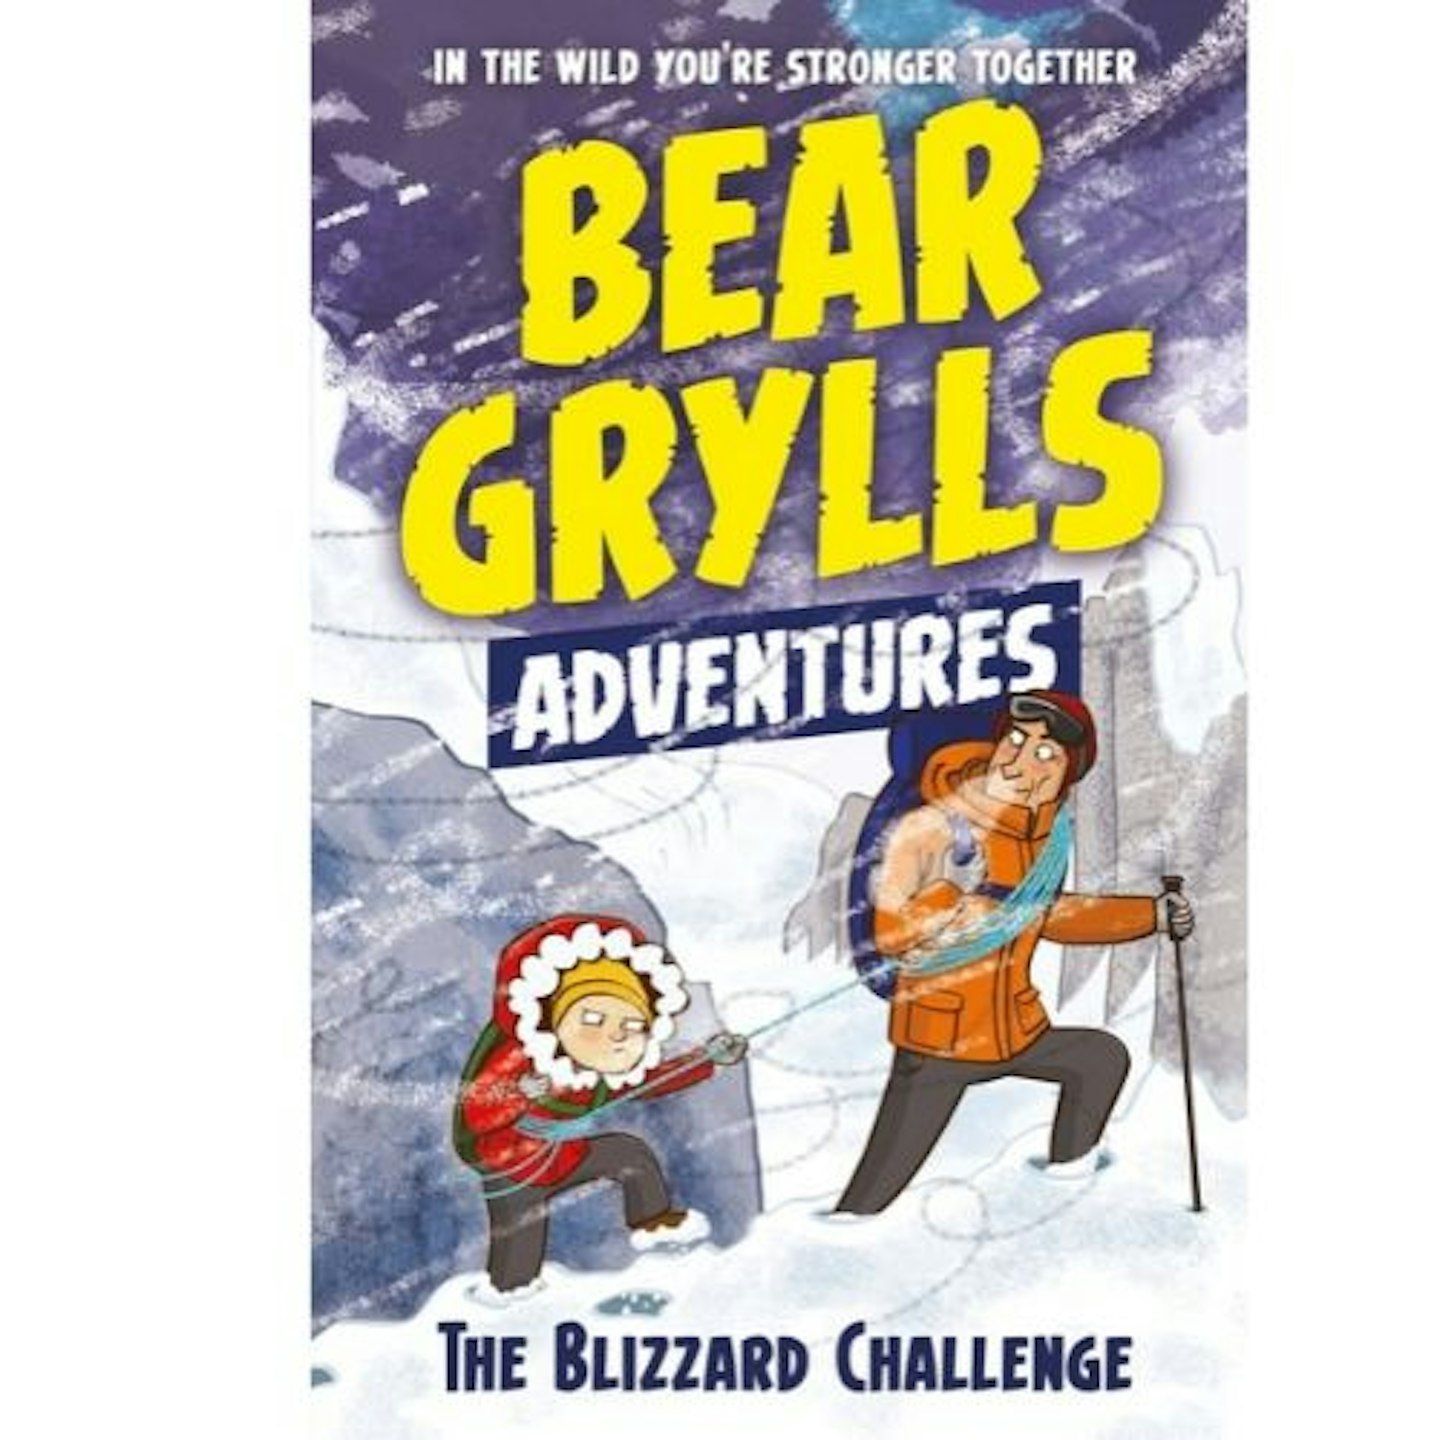 Bear Grylls Adventure: The Blizzard Challenge by Bear Grylls